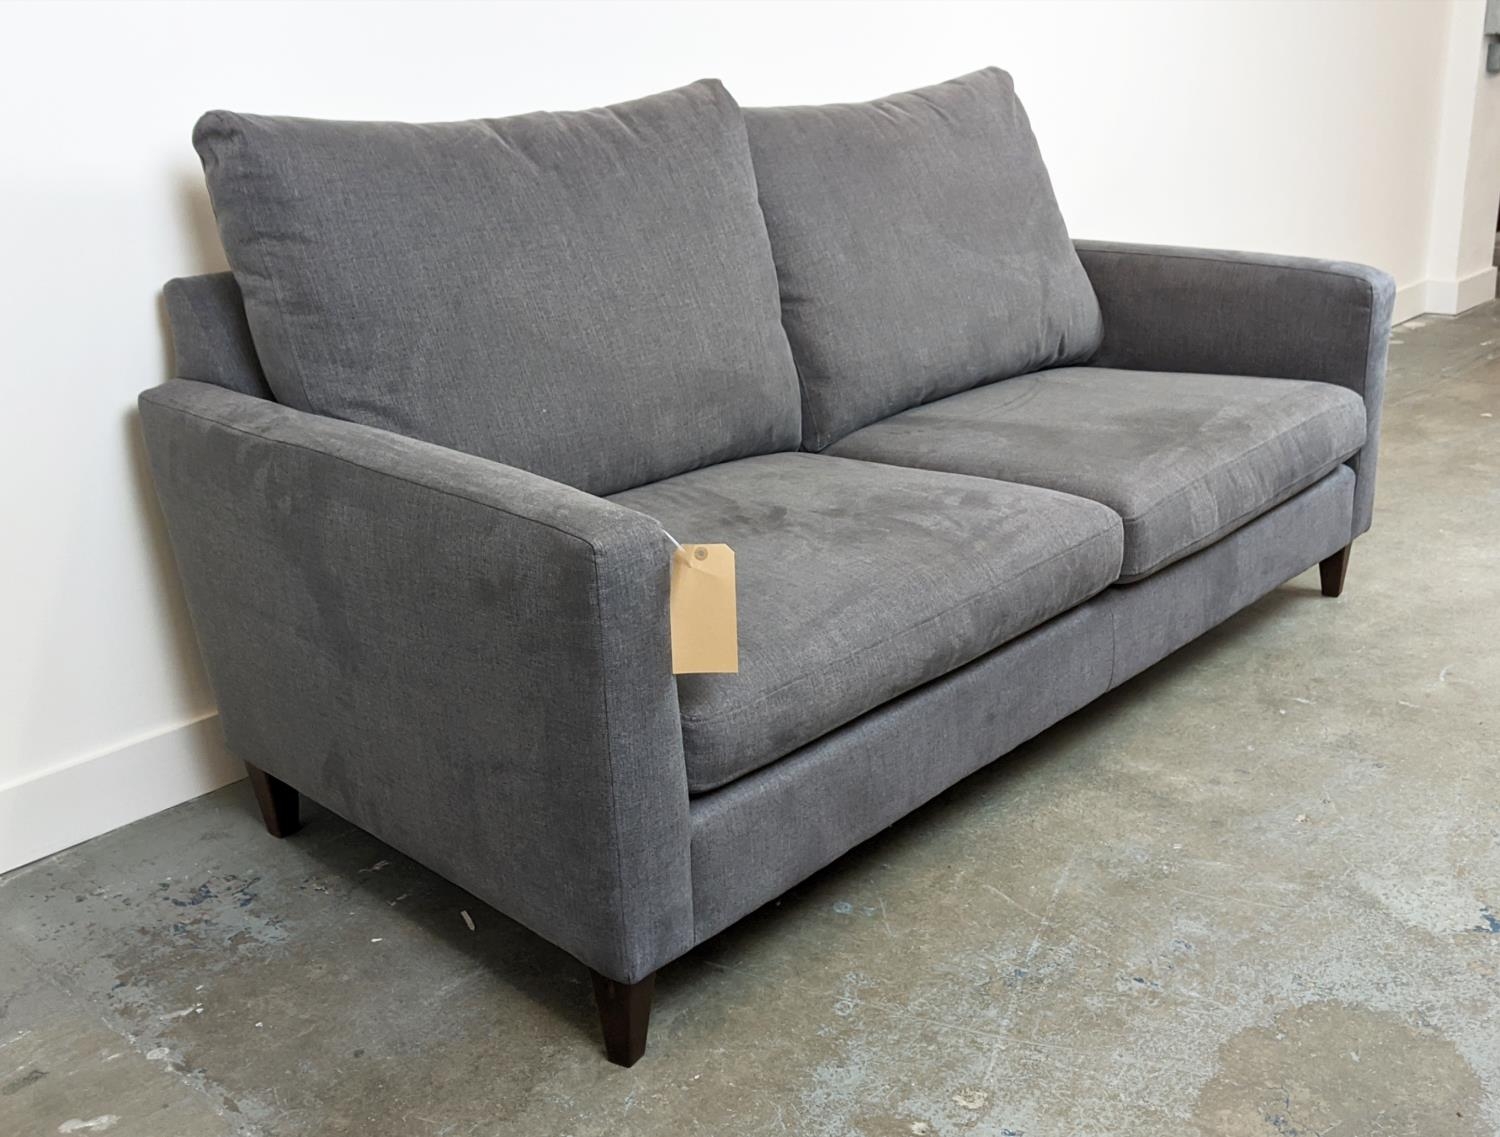 SOFA, grey upholstery, 78cm H x 188cm W. - Image 3 of 8